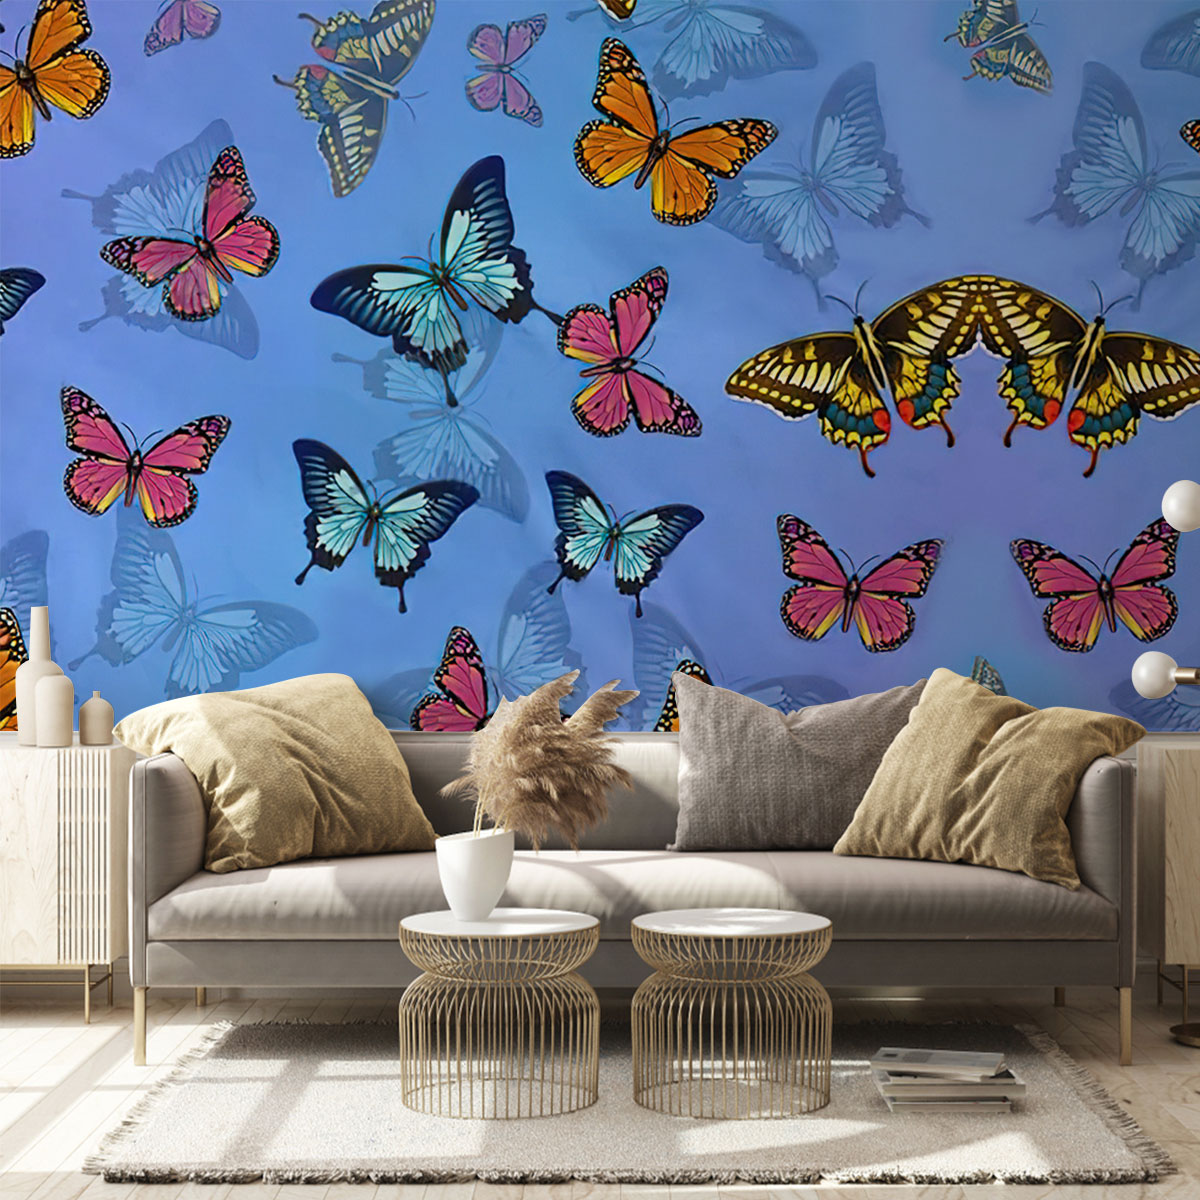 Butterfly Wall Mural